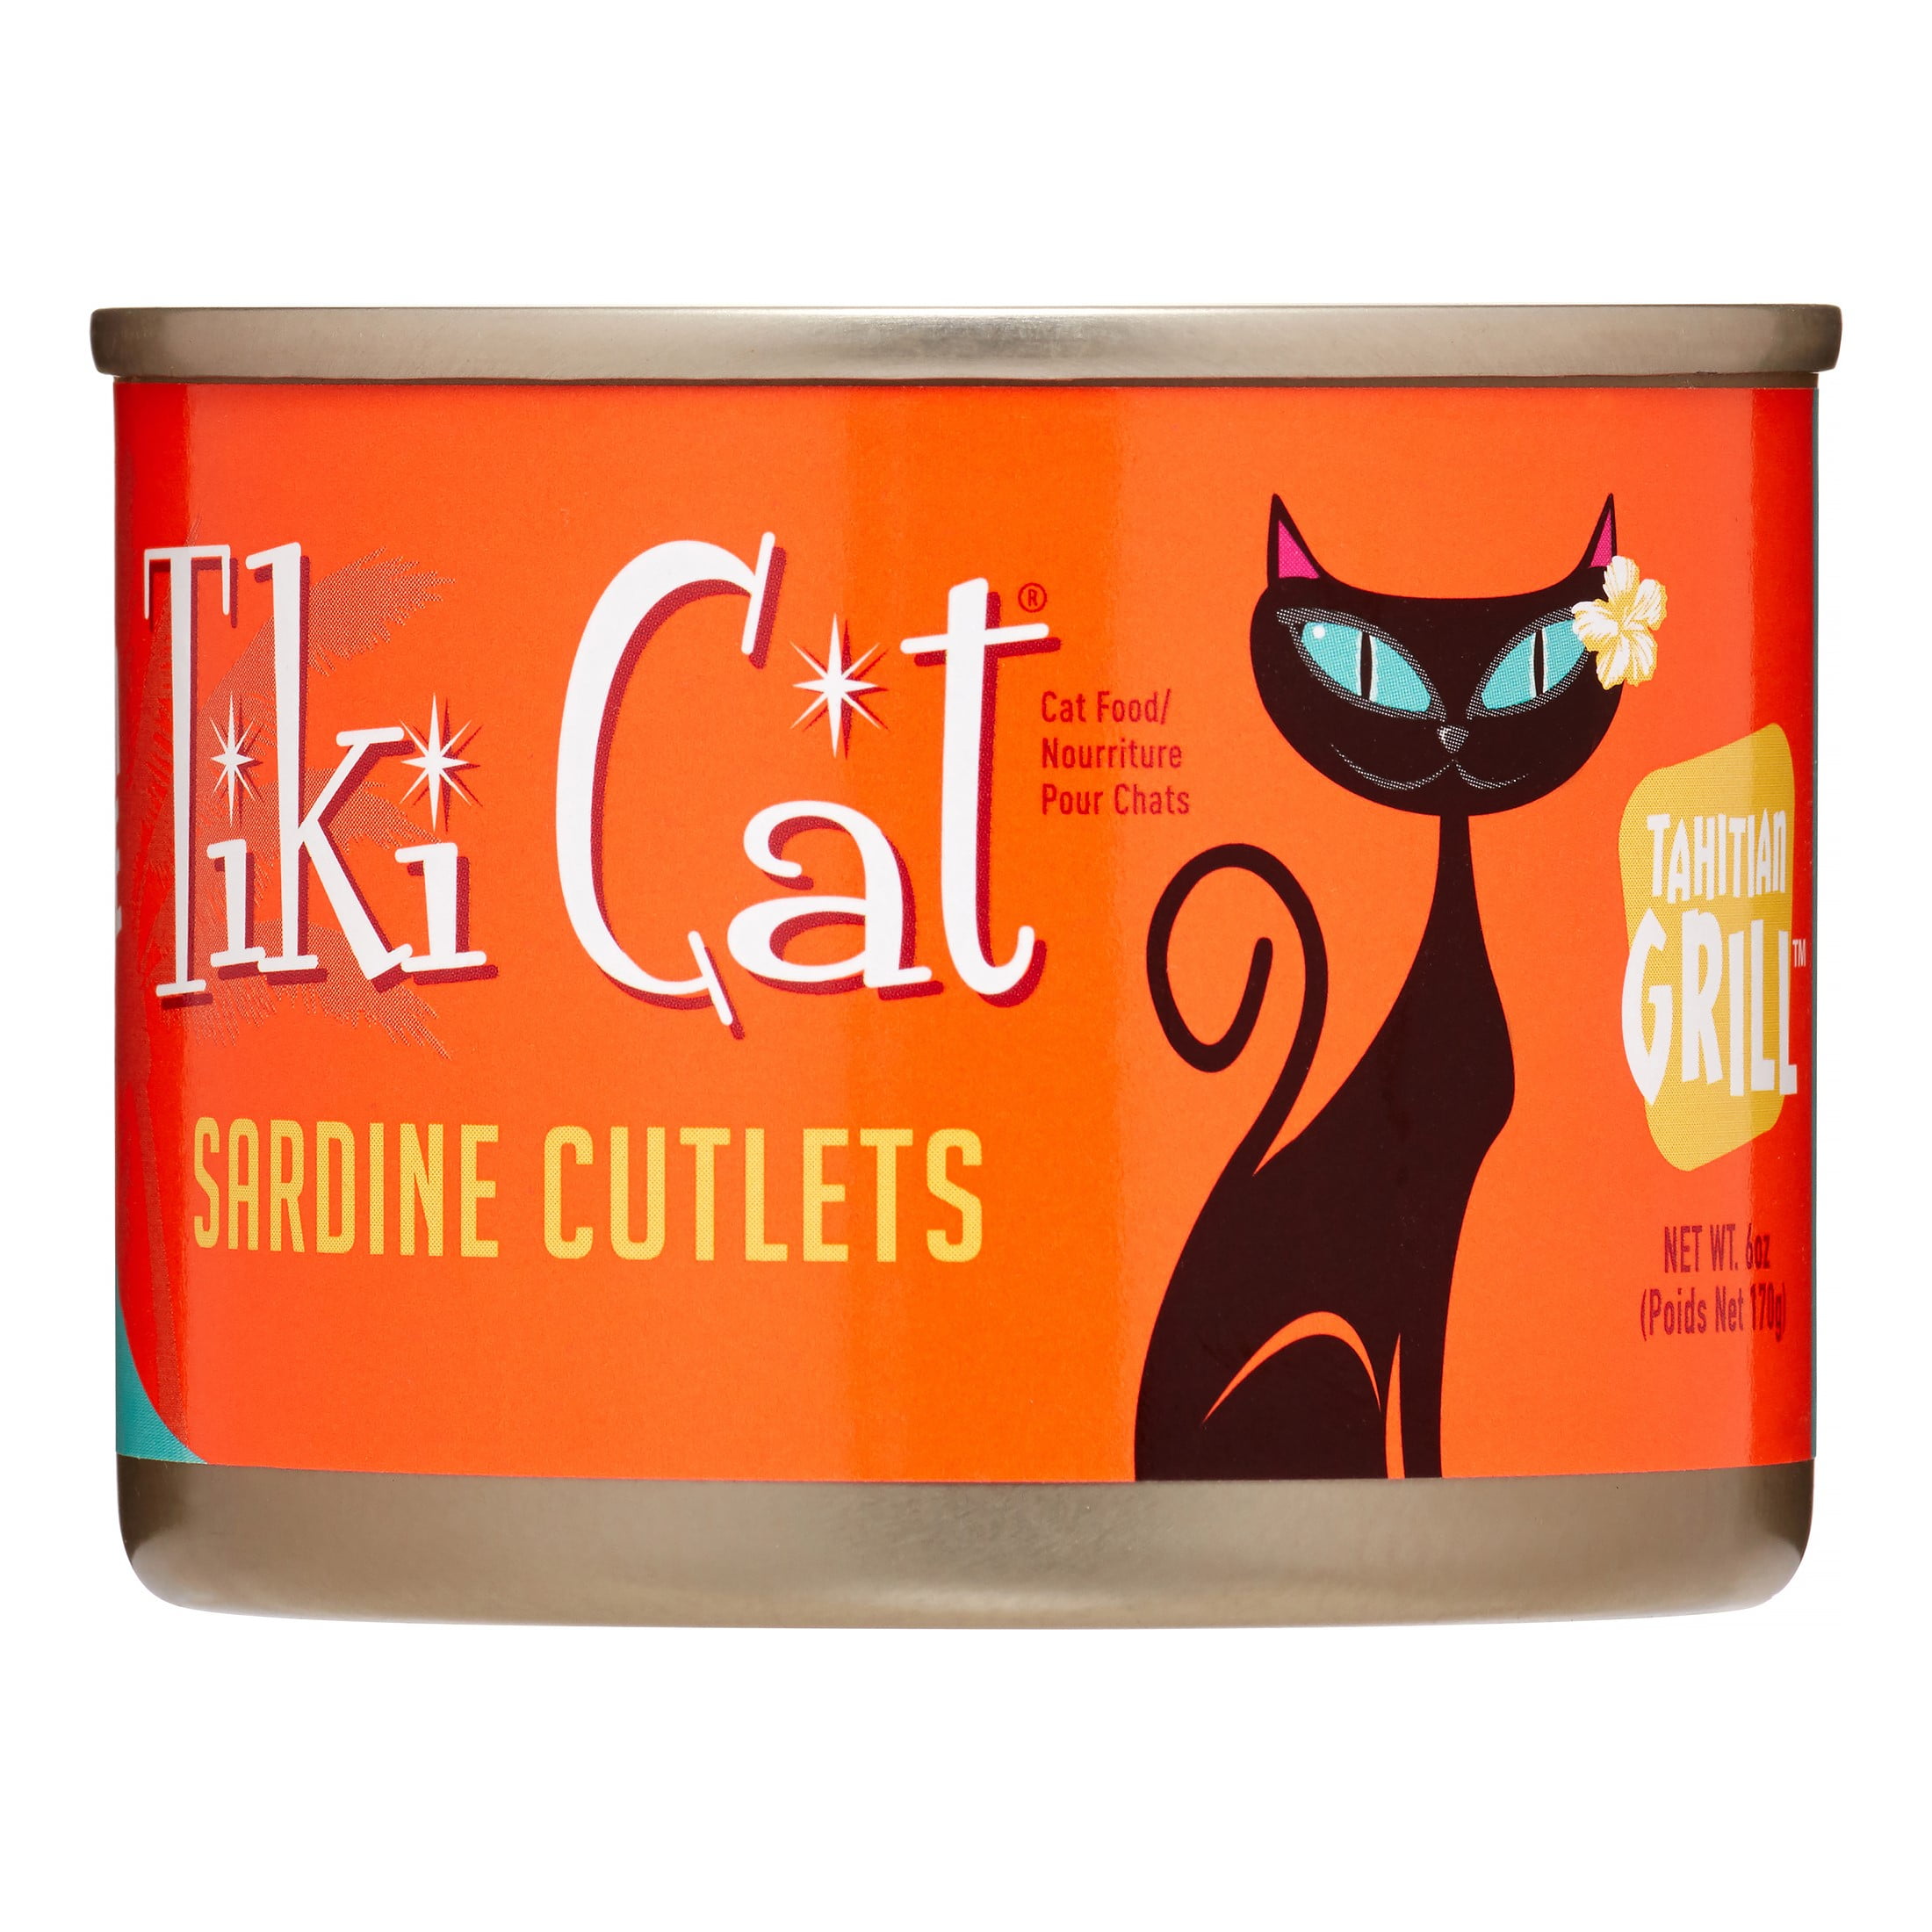 (8 Pack) Tiki Cat Tahitian Grill Sardine Wet Cat Food, 6 oz. Cans